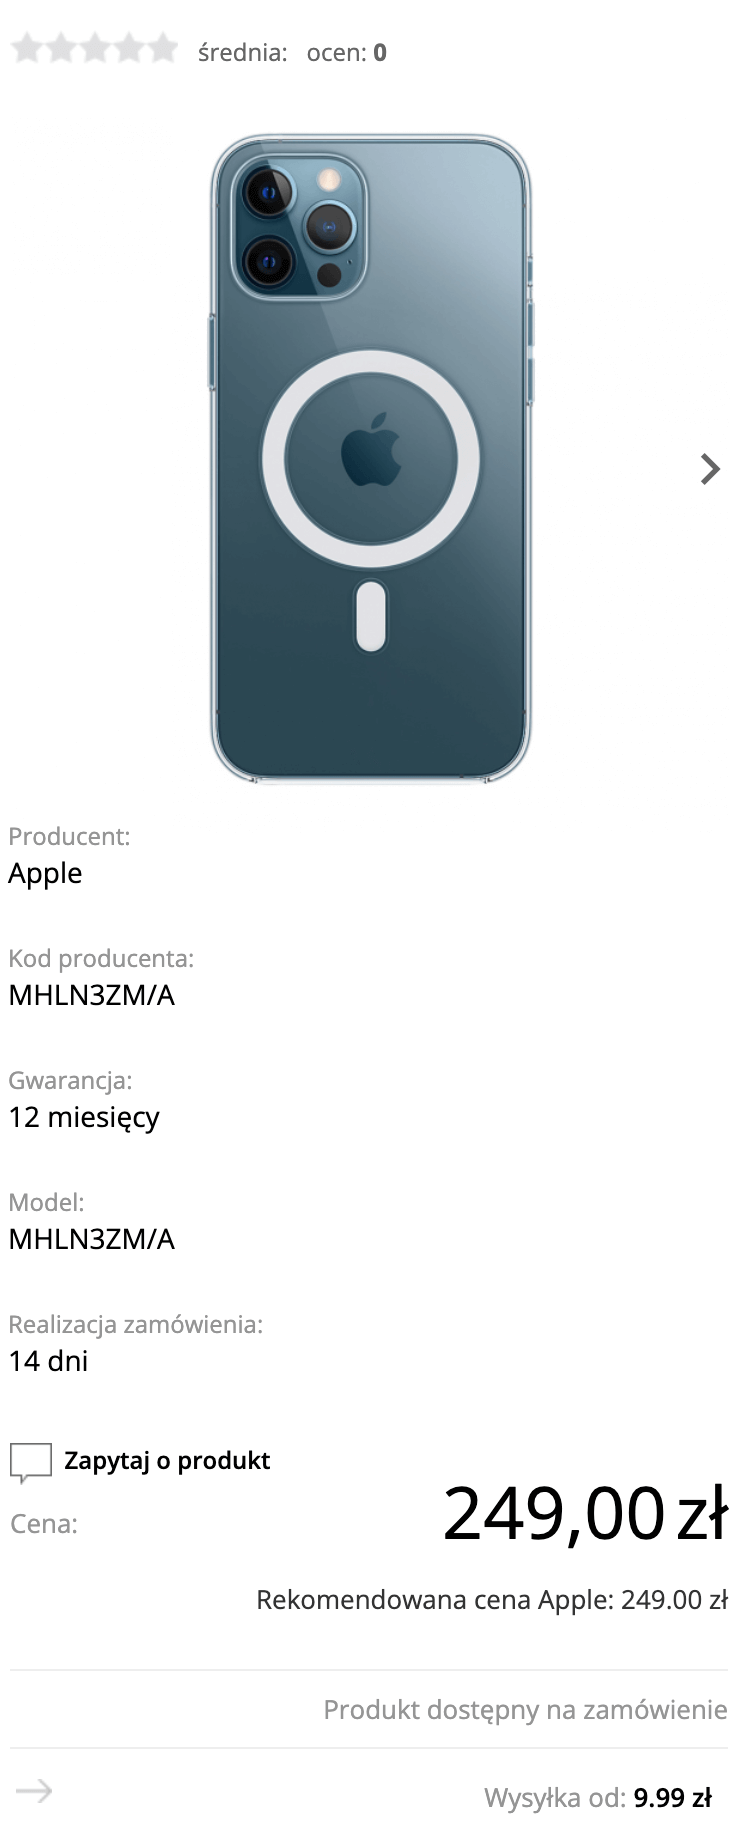 Apple Przezroczyste etui z MagSafe do iPhone’a 12 Pro Max - MHLN3ZM/A 